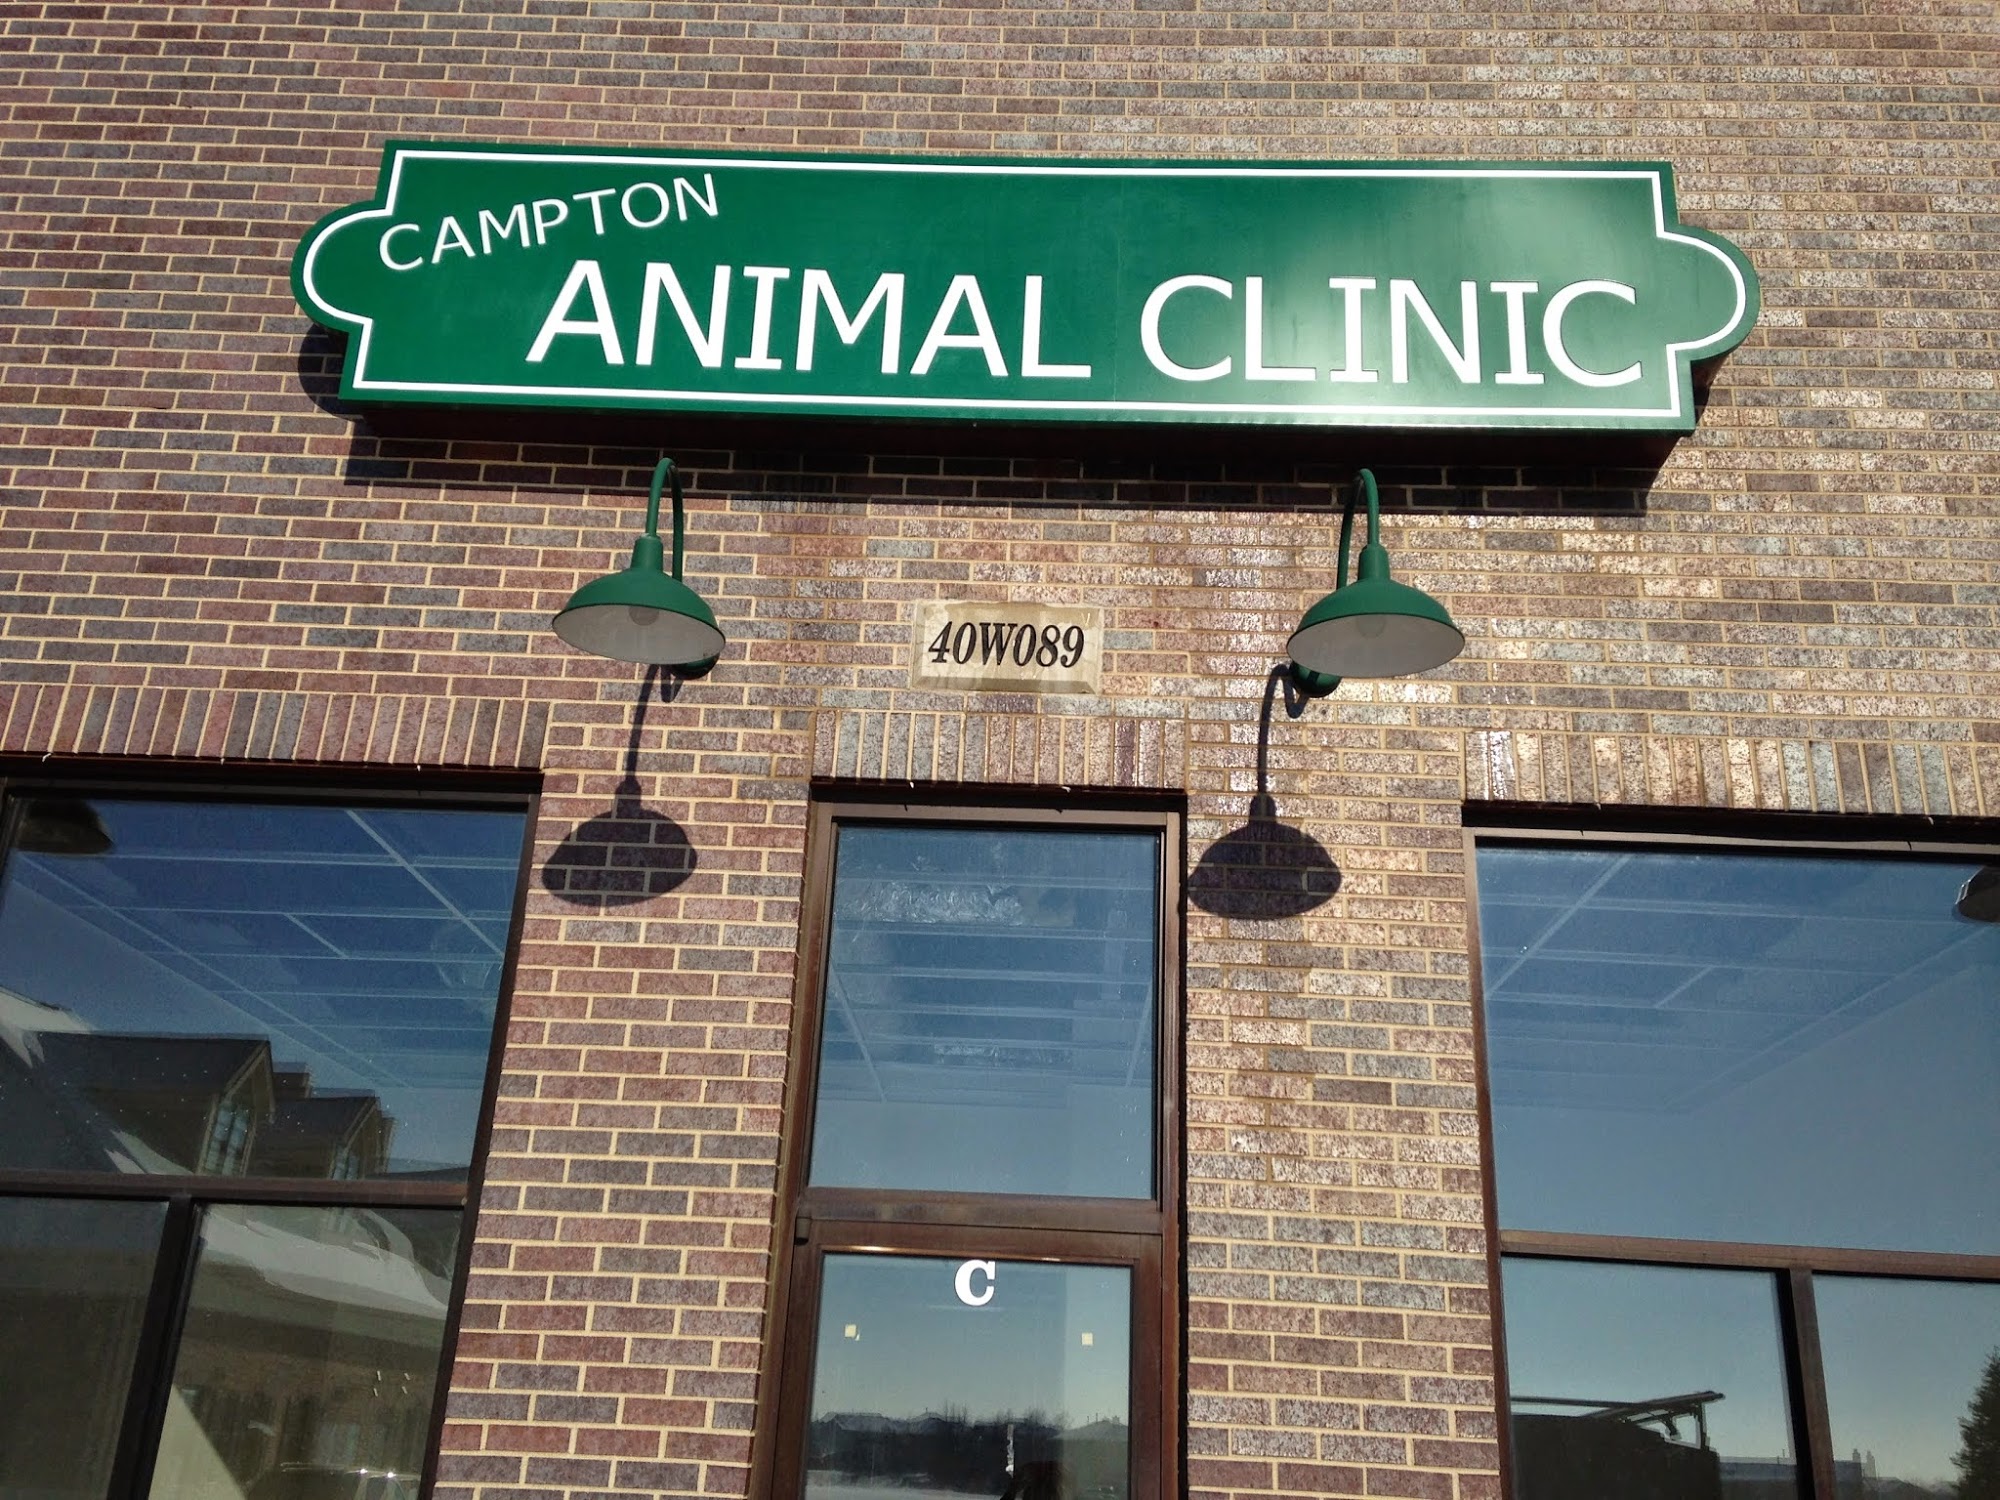 Campton Animal Clinic